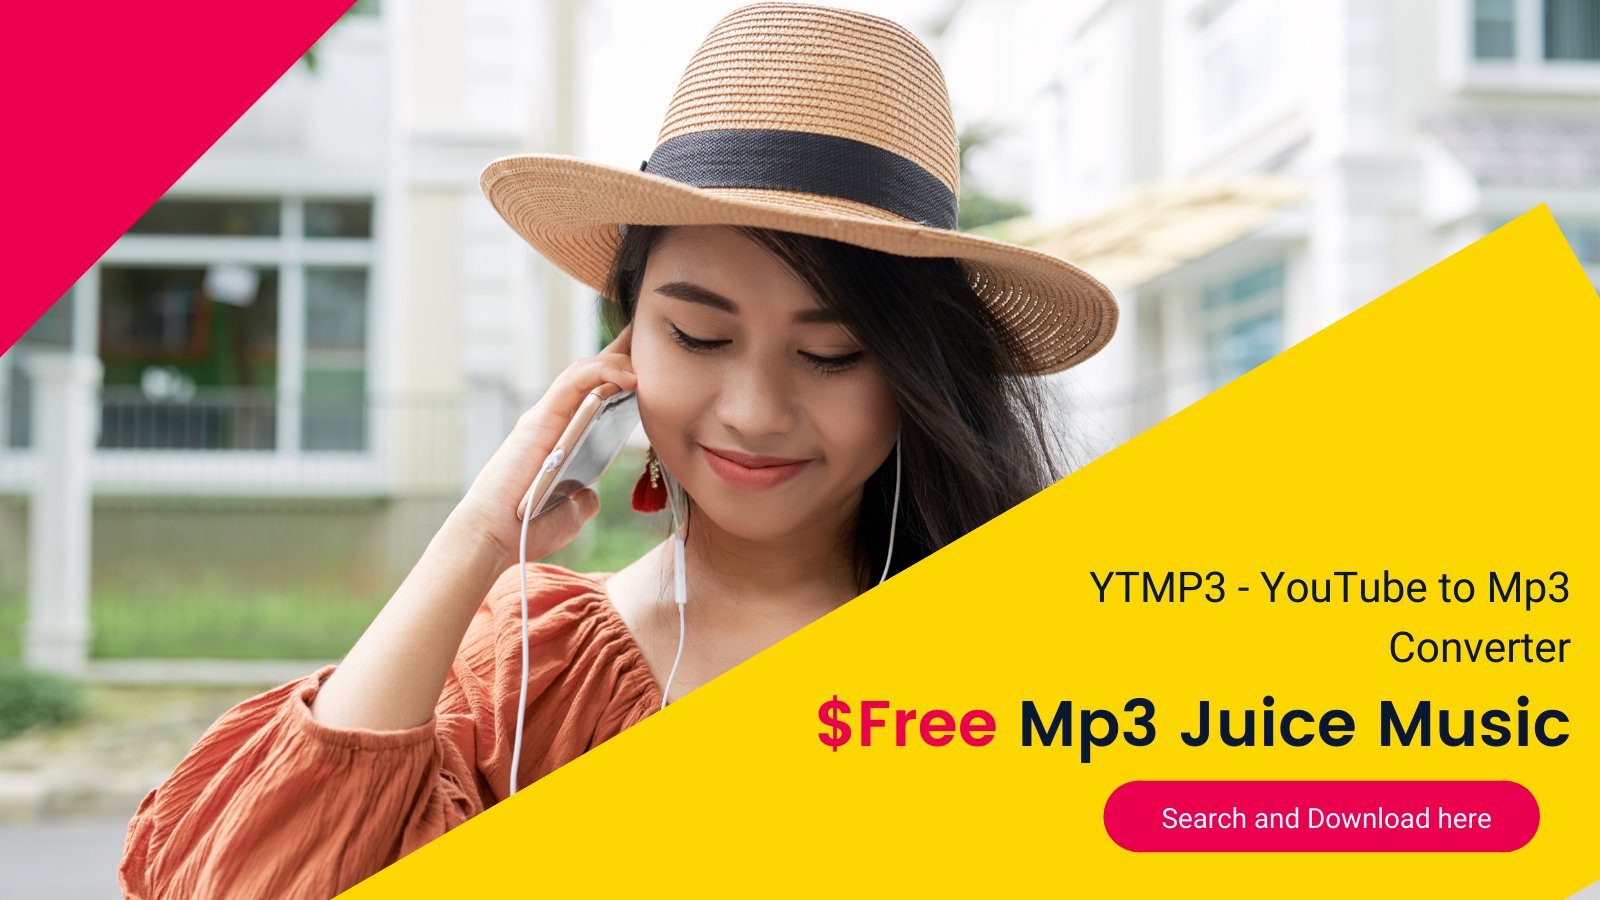 Mp3 juice download free mp3 con artist